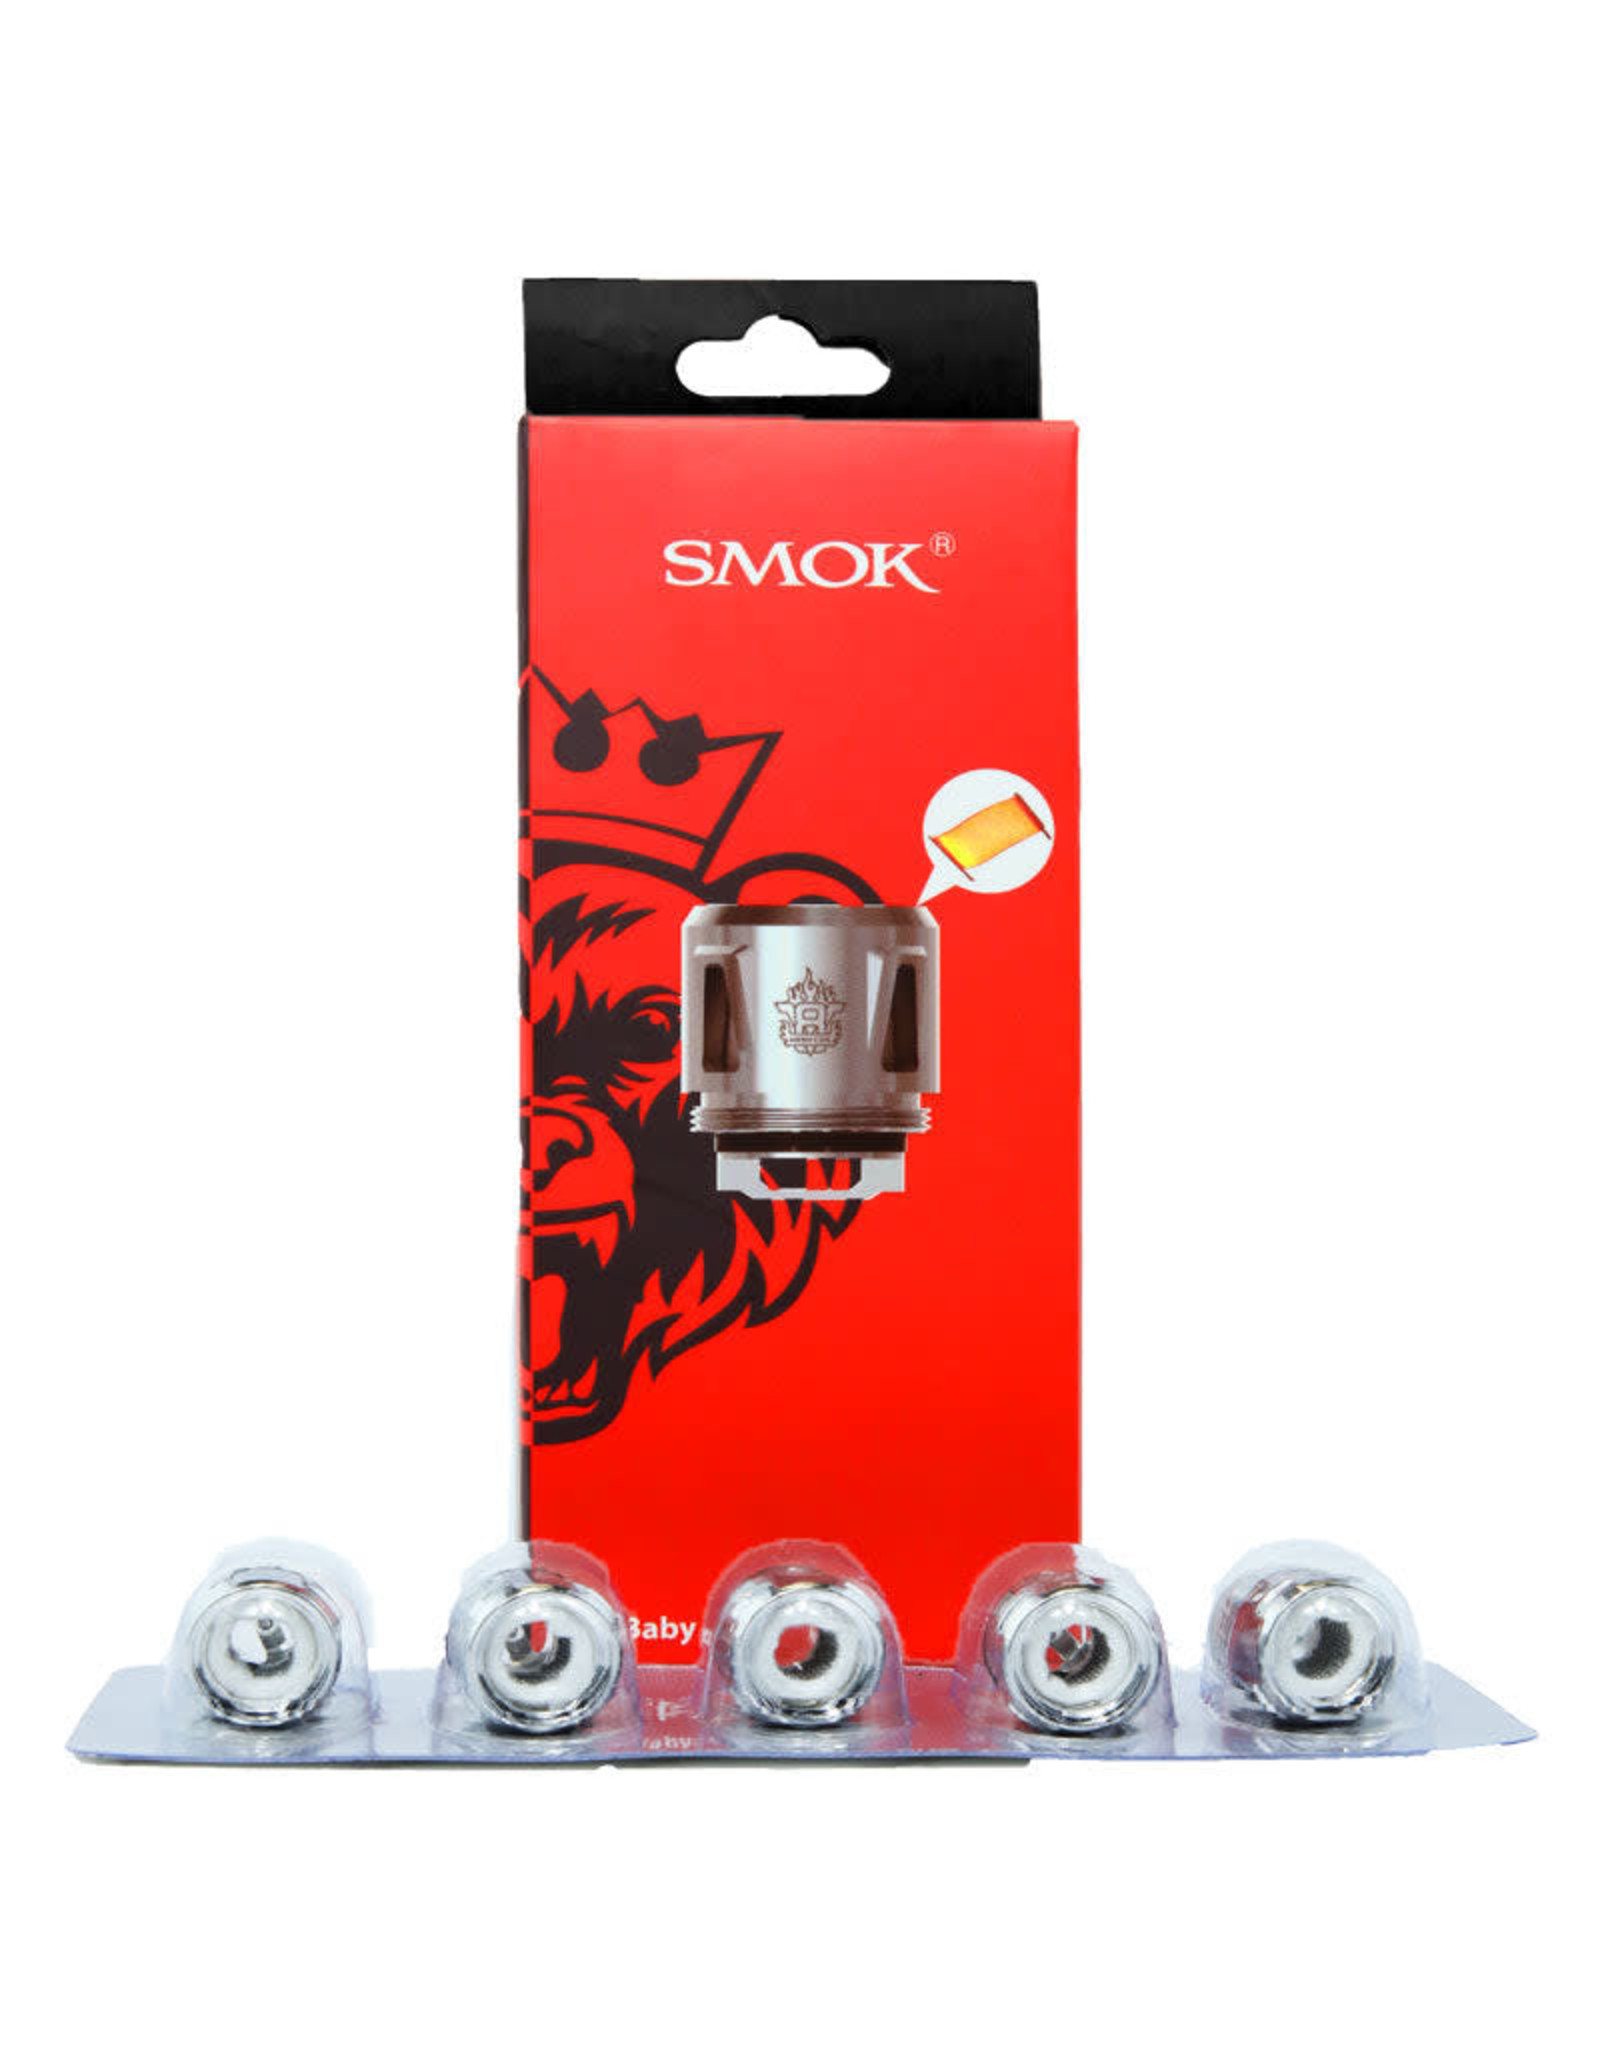 SmokTech SmokTech Coil Smok Baby Mesh box